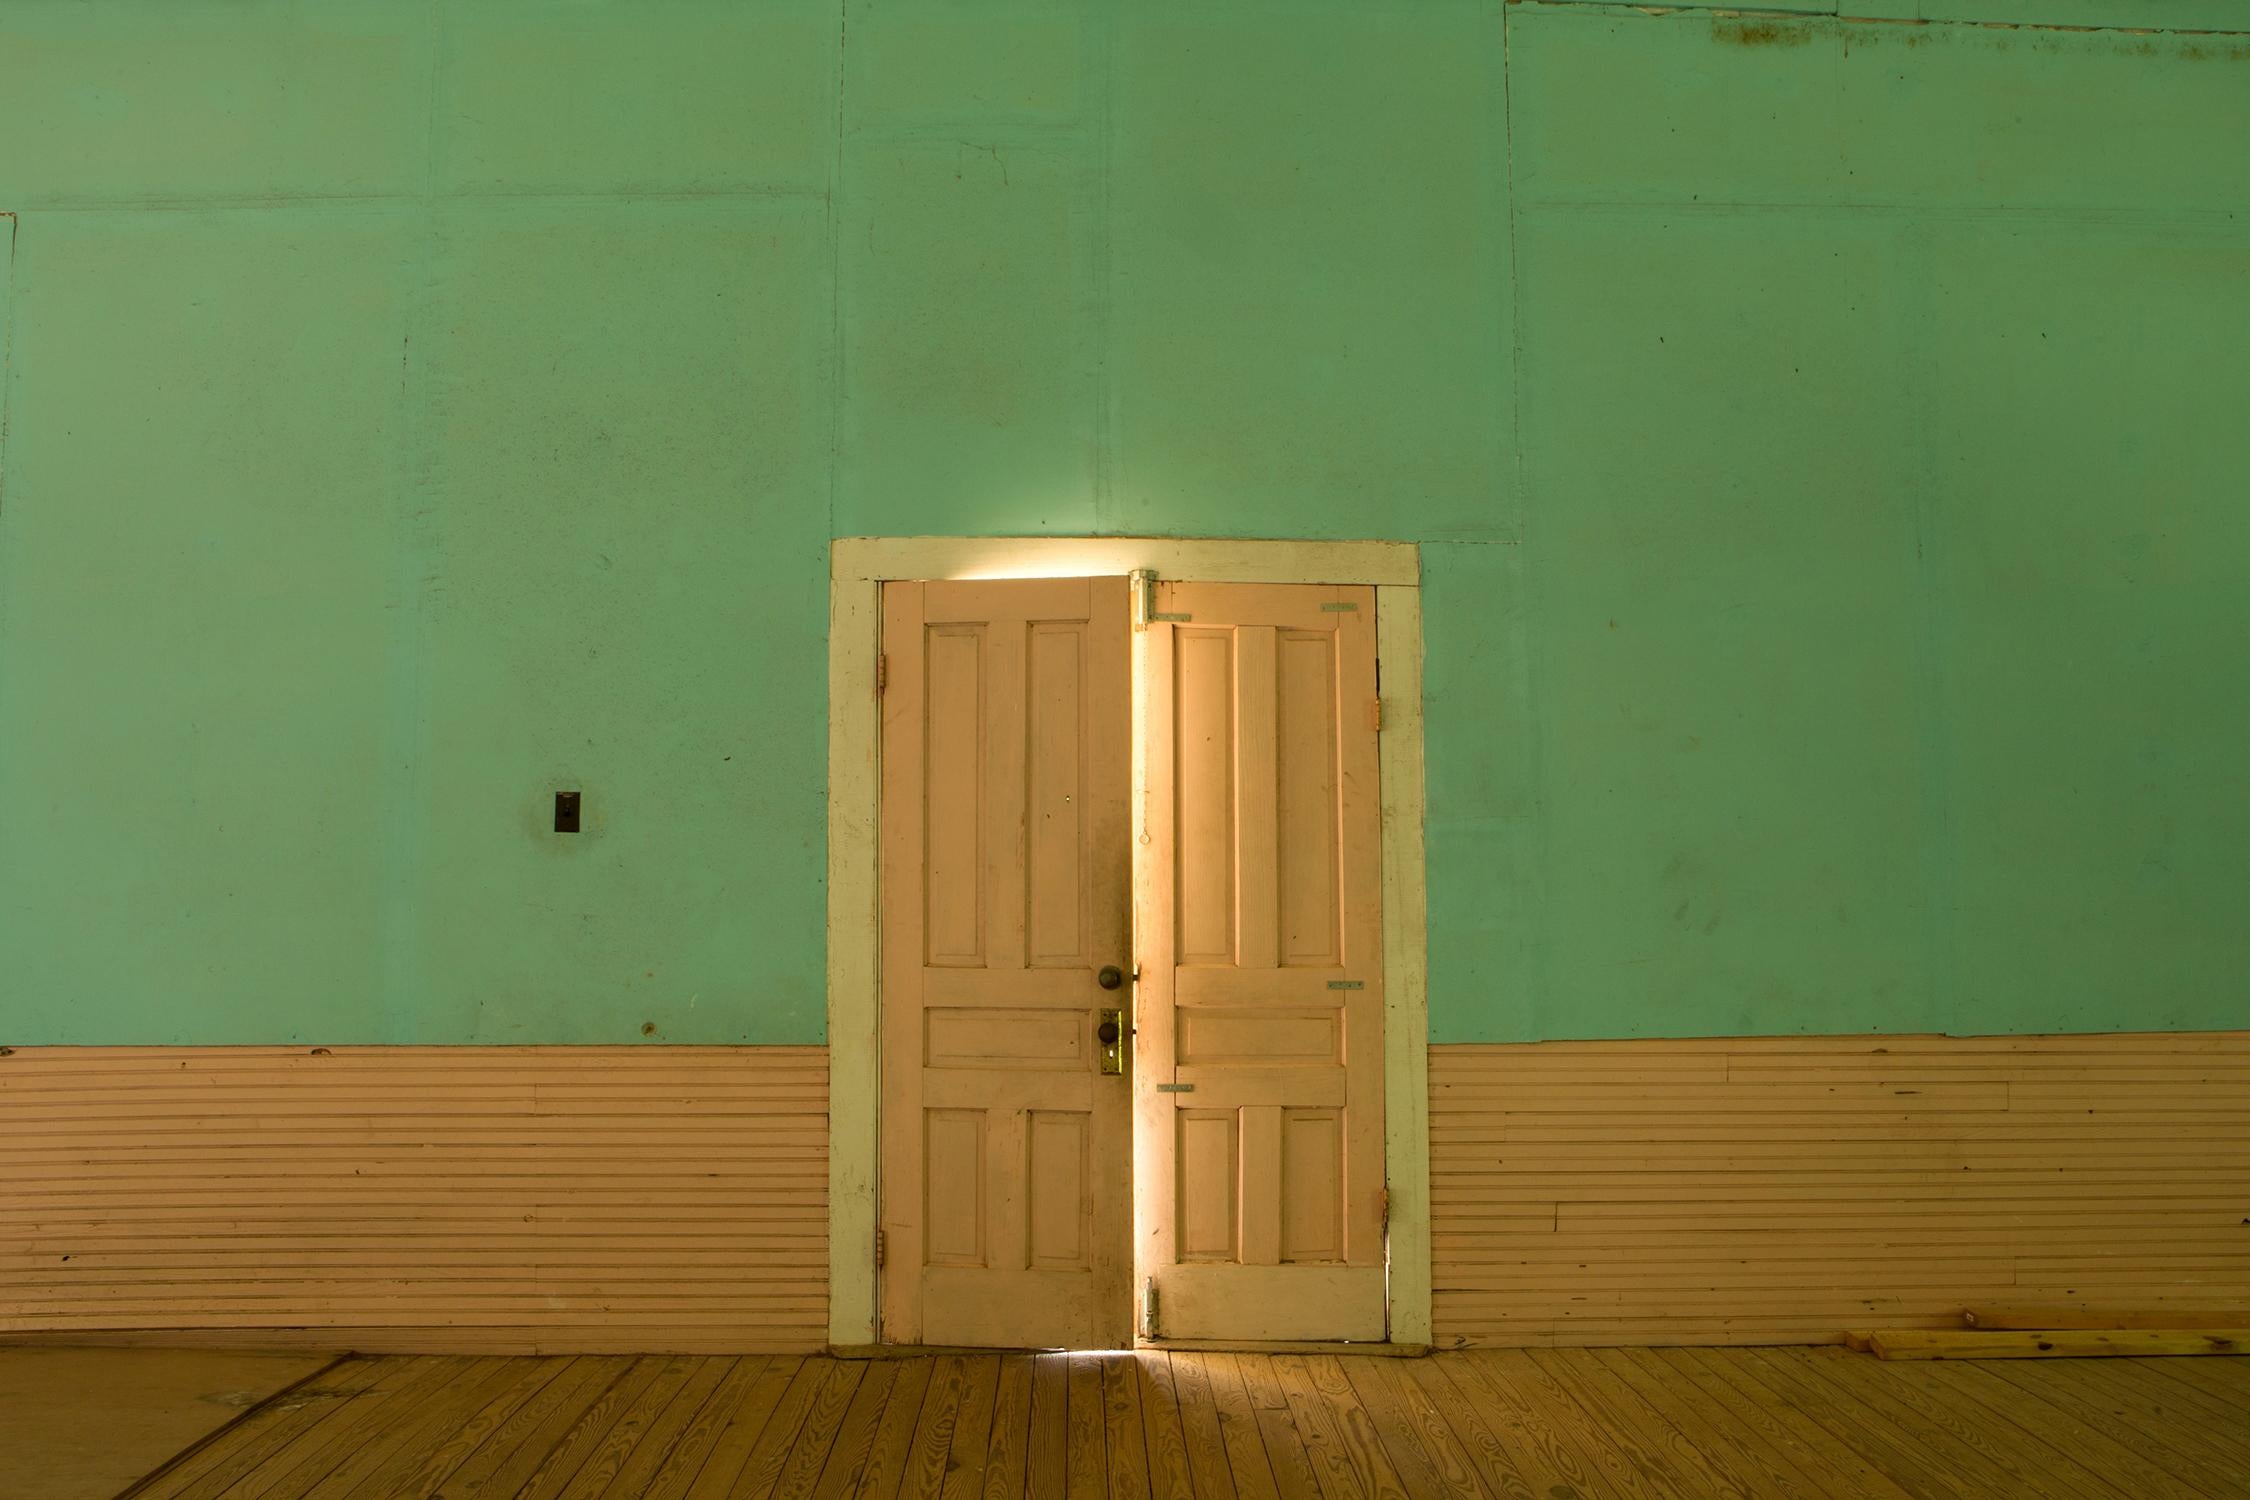 Rebecca Skinner Color Photograph - "Anticipation", contemporary, interior, church, doors, green, color photograph